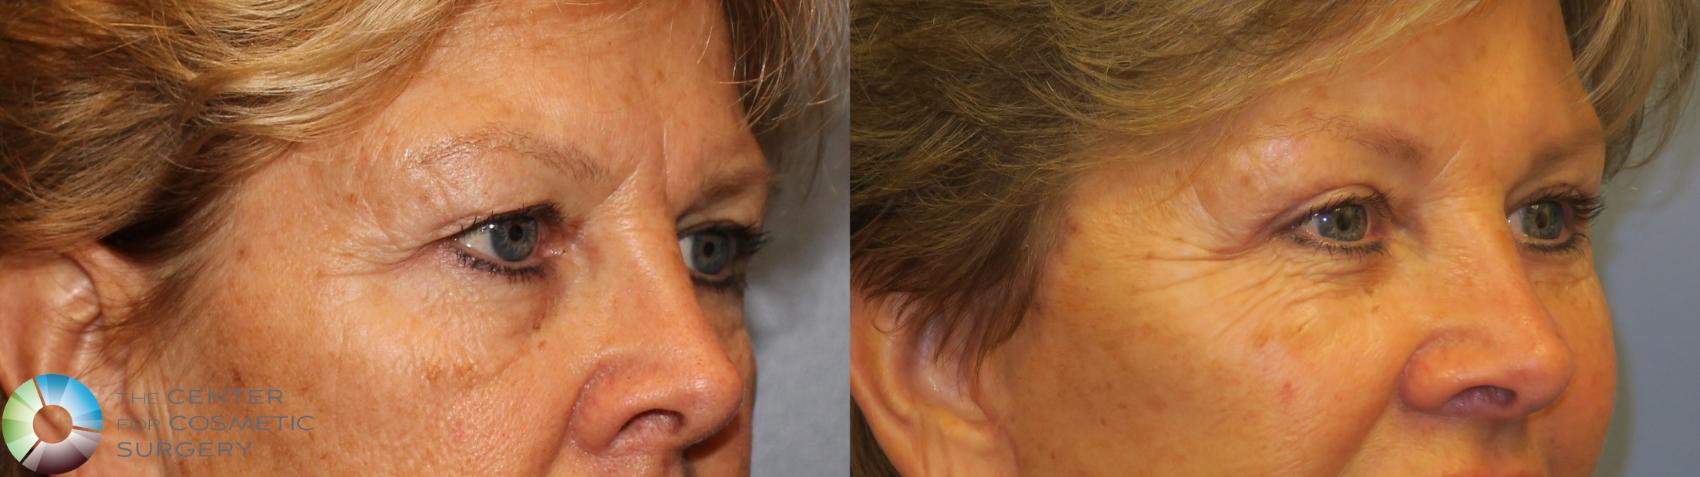 Before & After Eyelid Lift Case 11486 brow eyes oblique View in Denver & Golden, CO